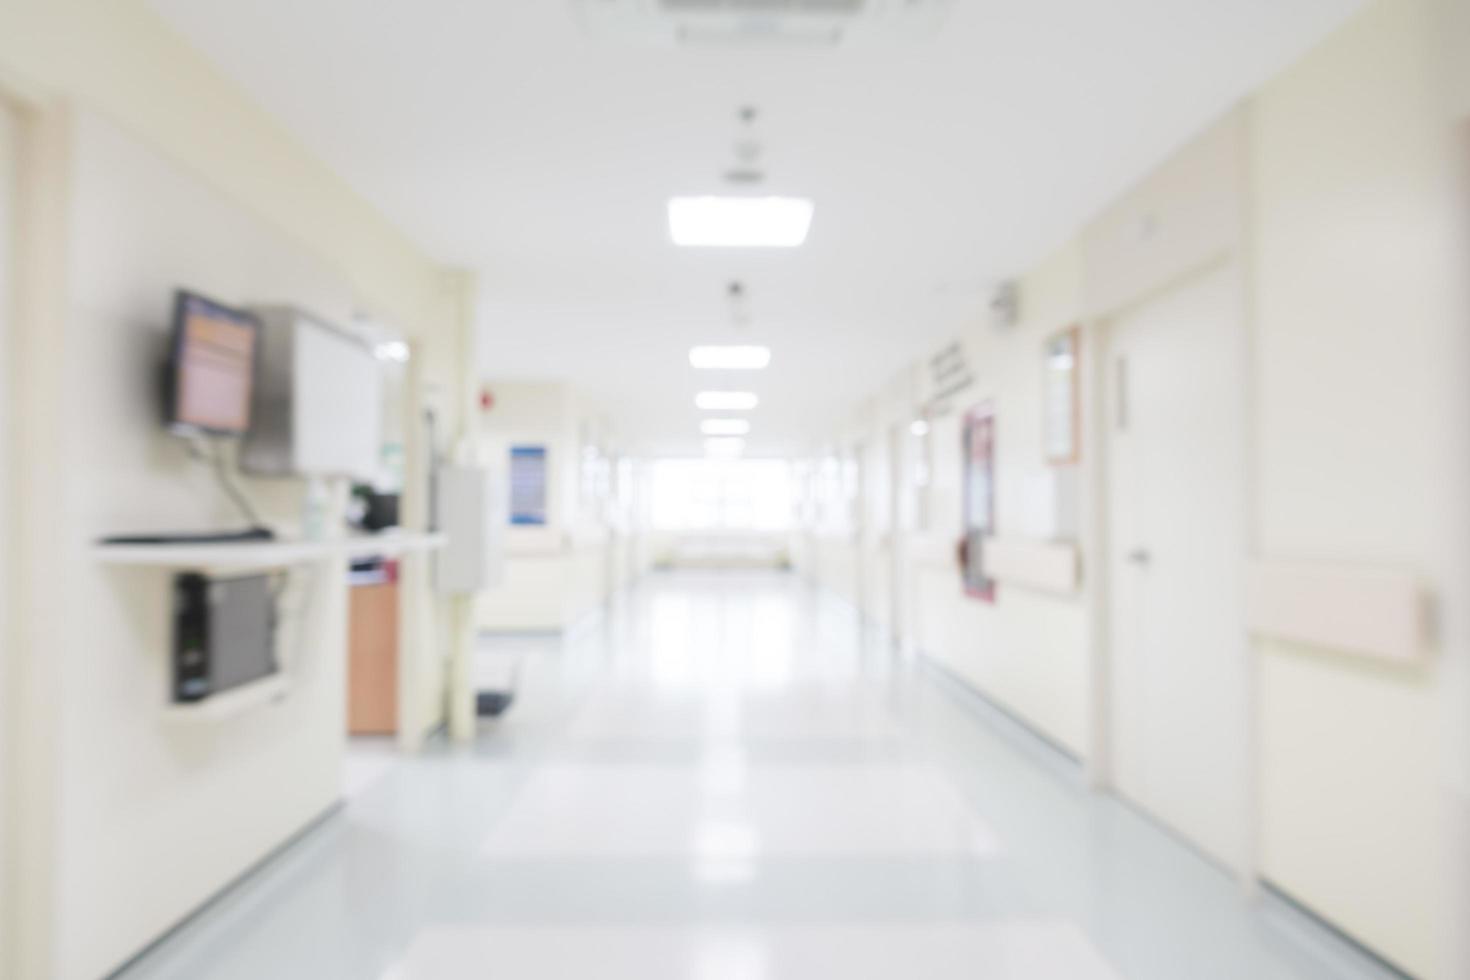 Blur hospital background photo